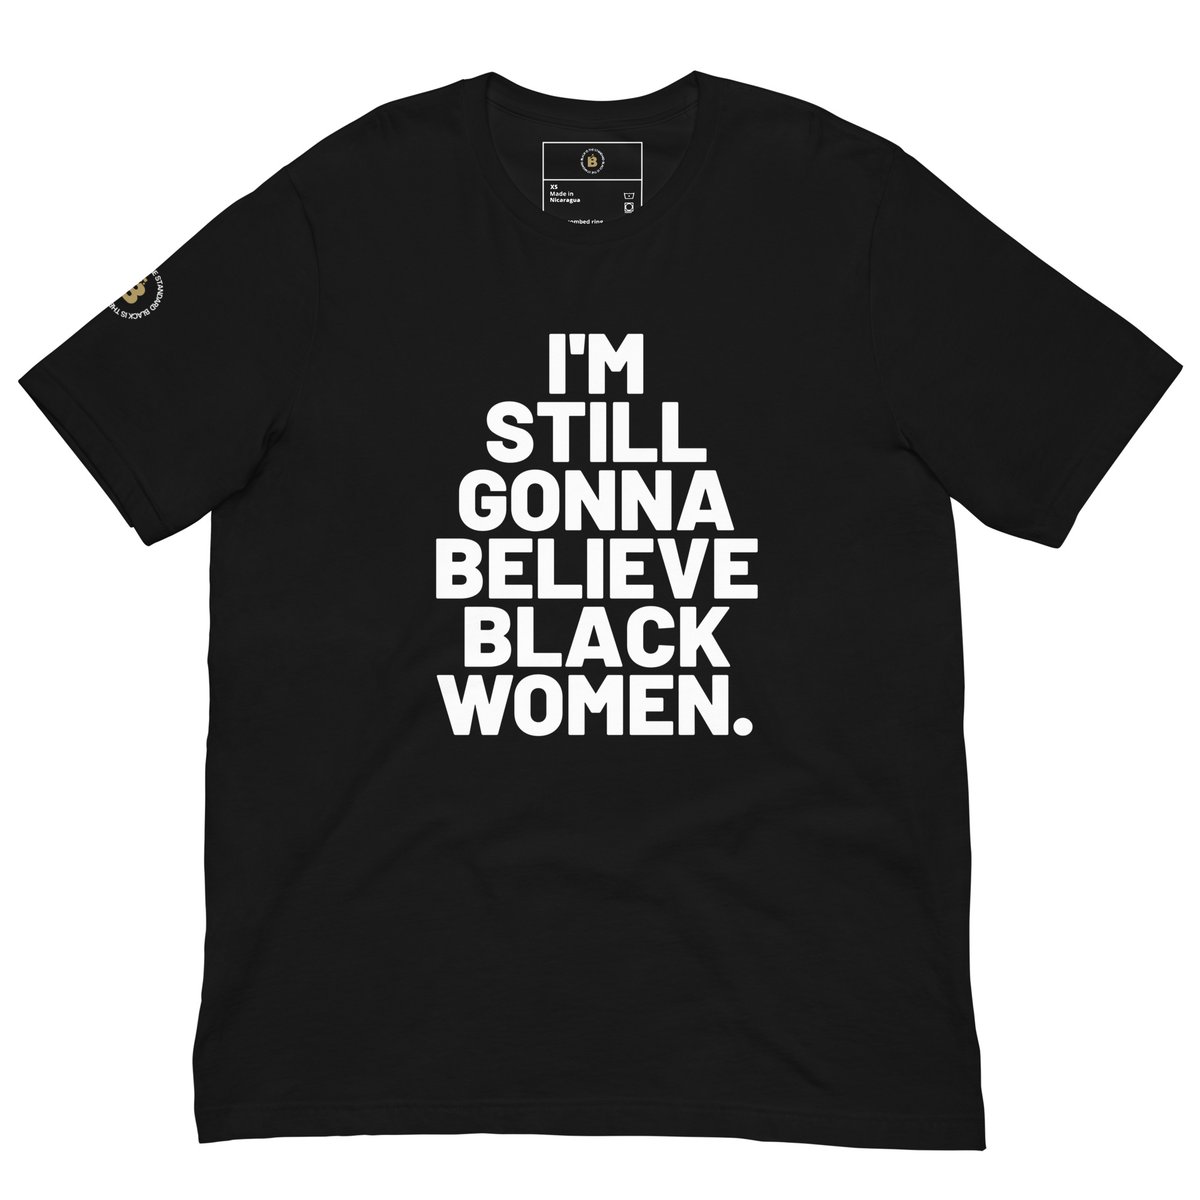 Image of "I'm Still Gonna Believe Black Women" Tee